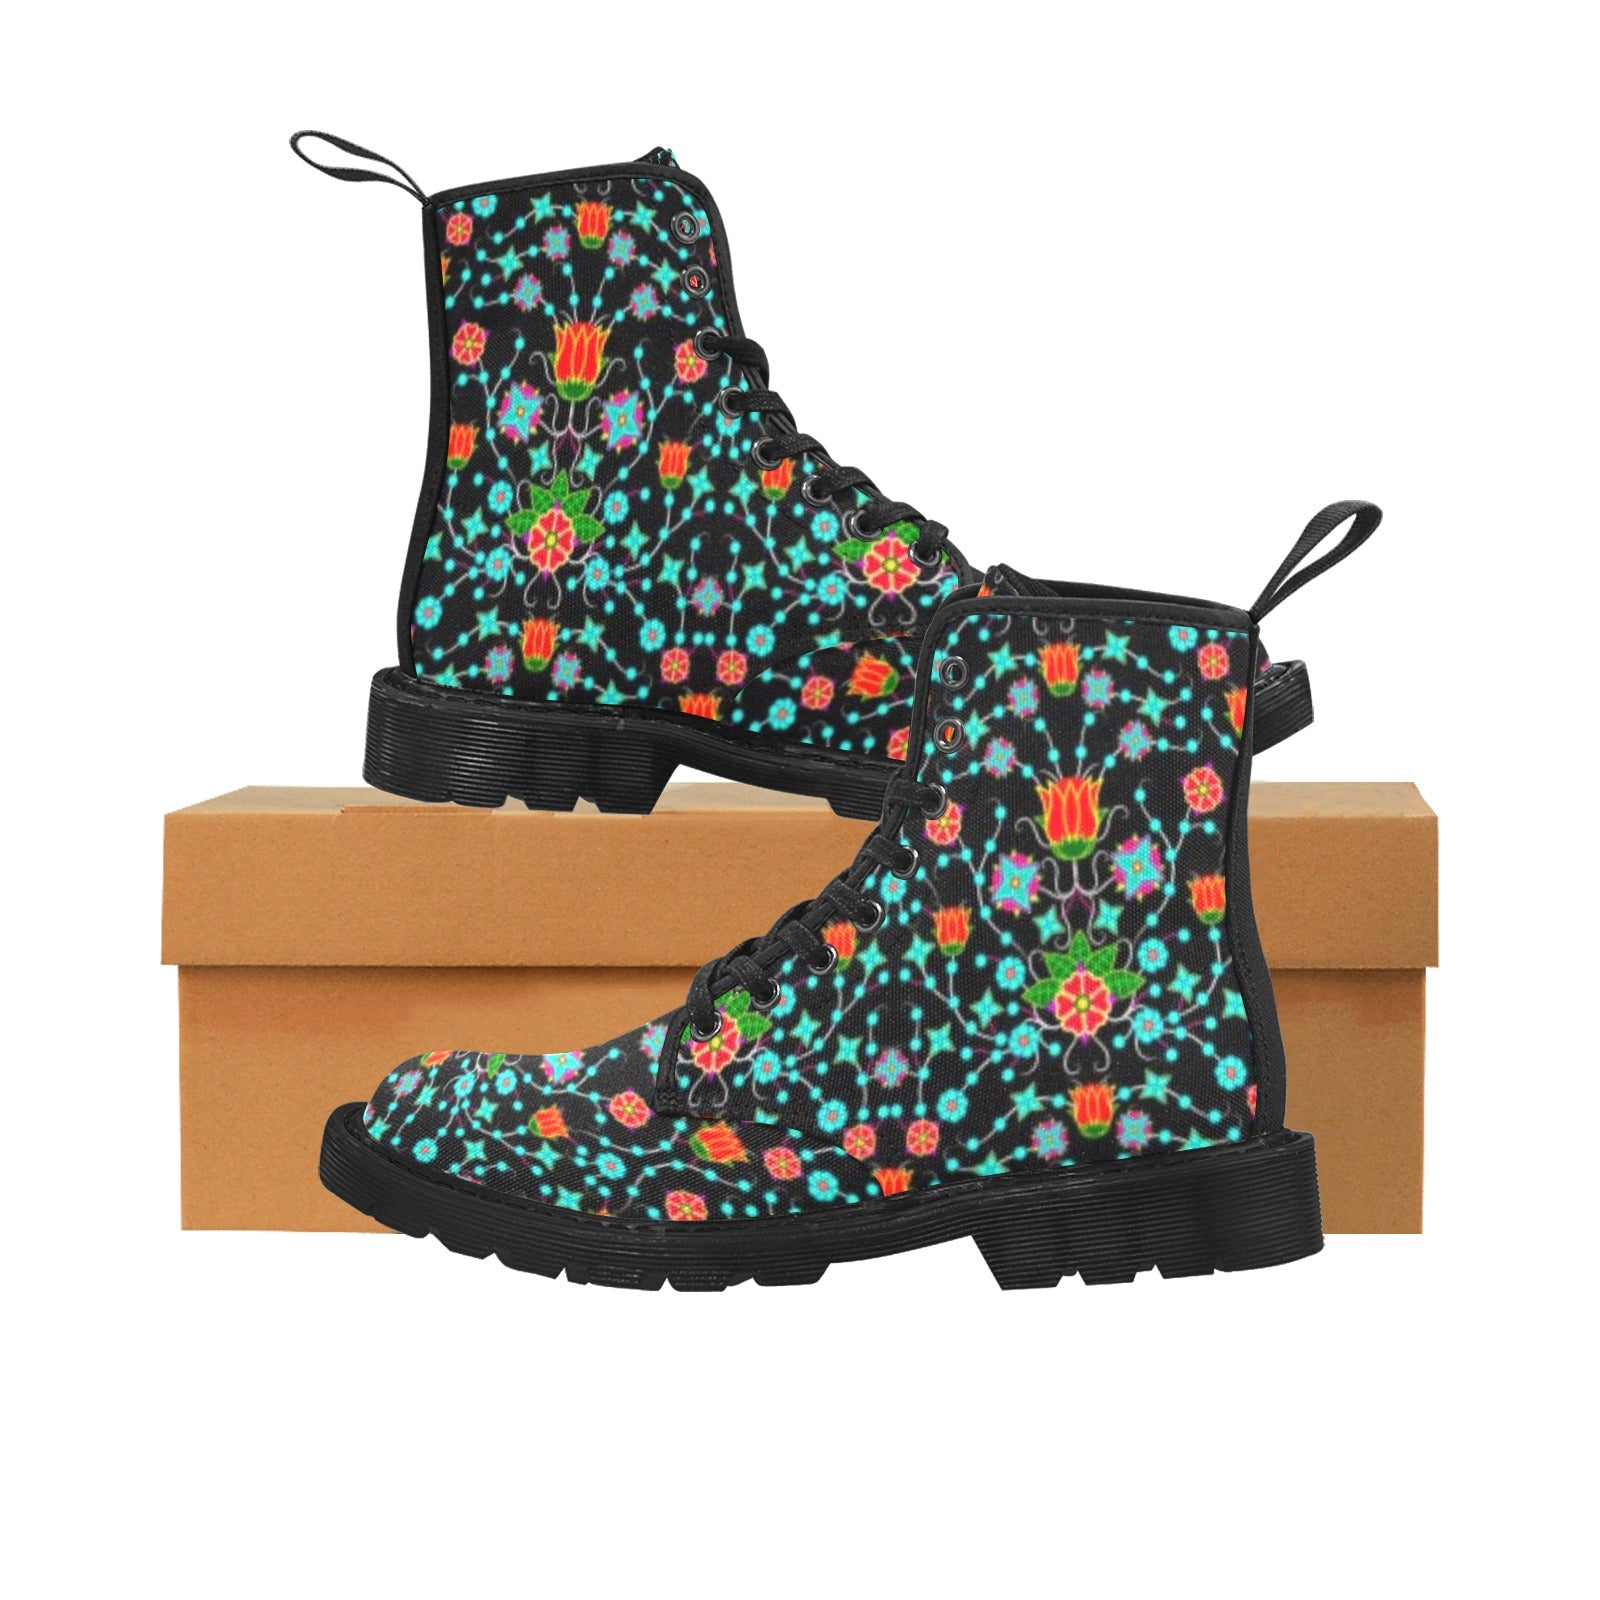 Floral Damask Upgrade Boots for Women (Black)